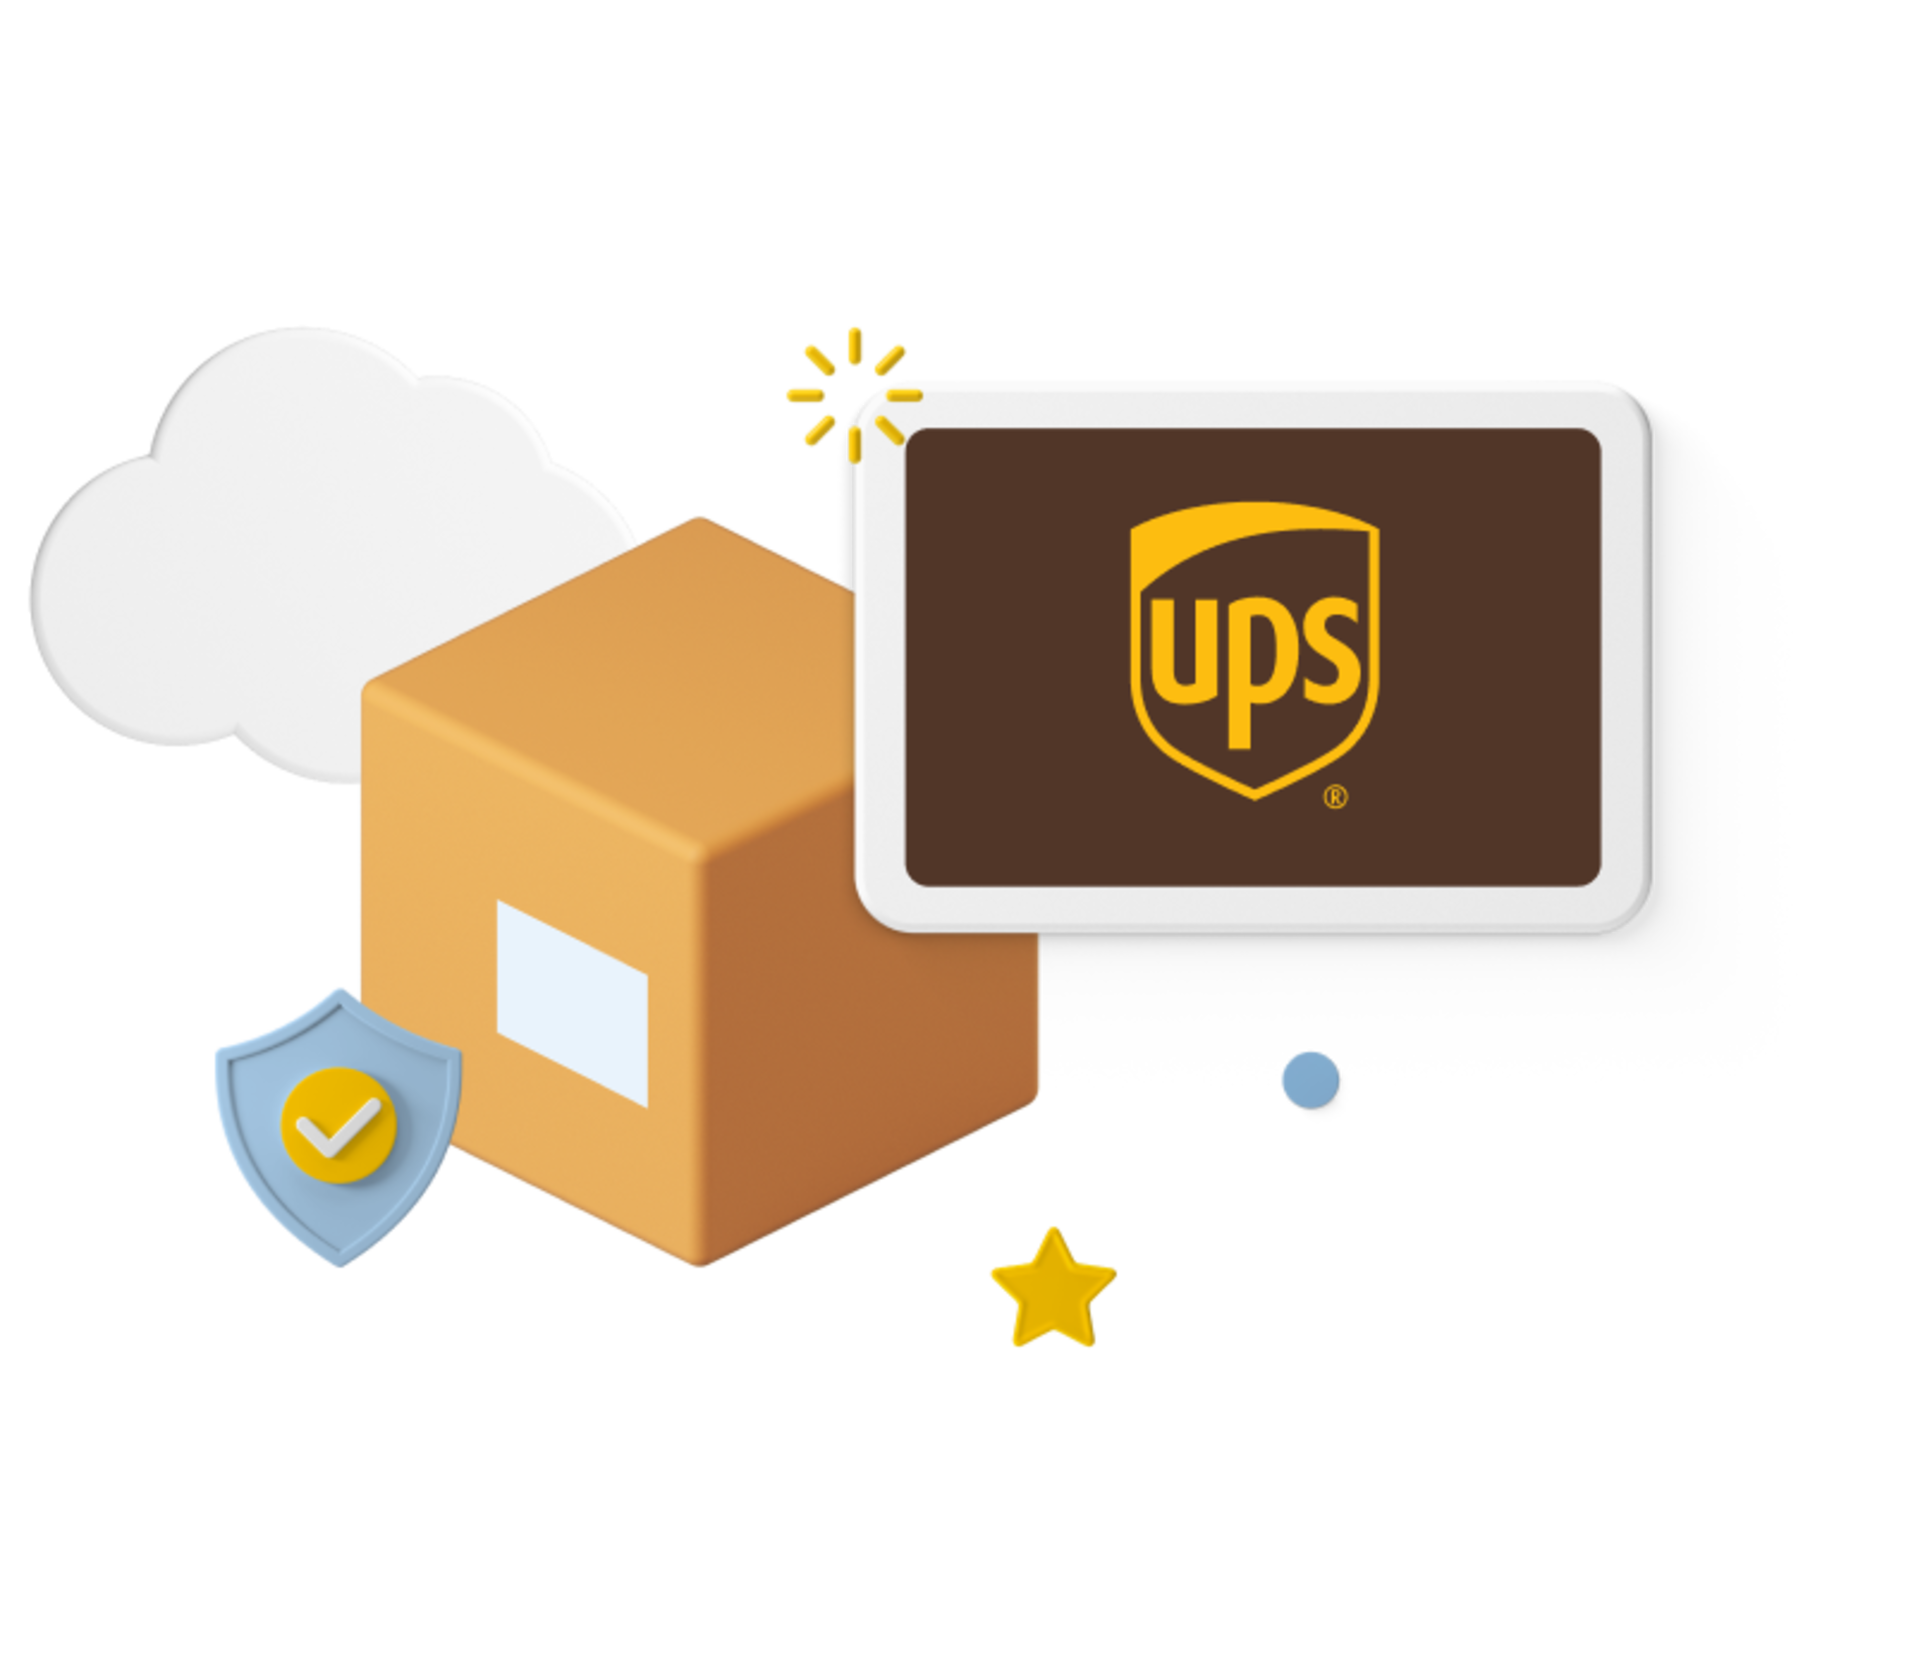 UPS Courier logo